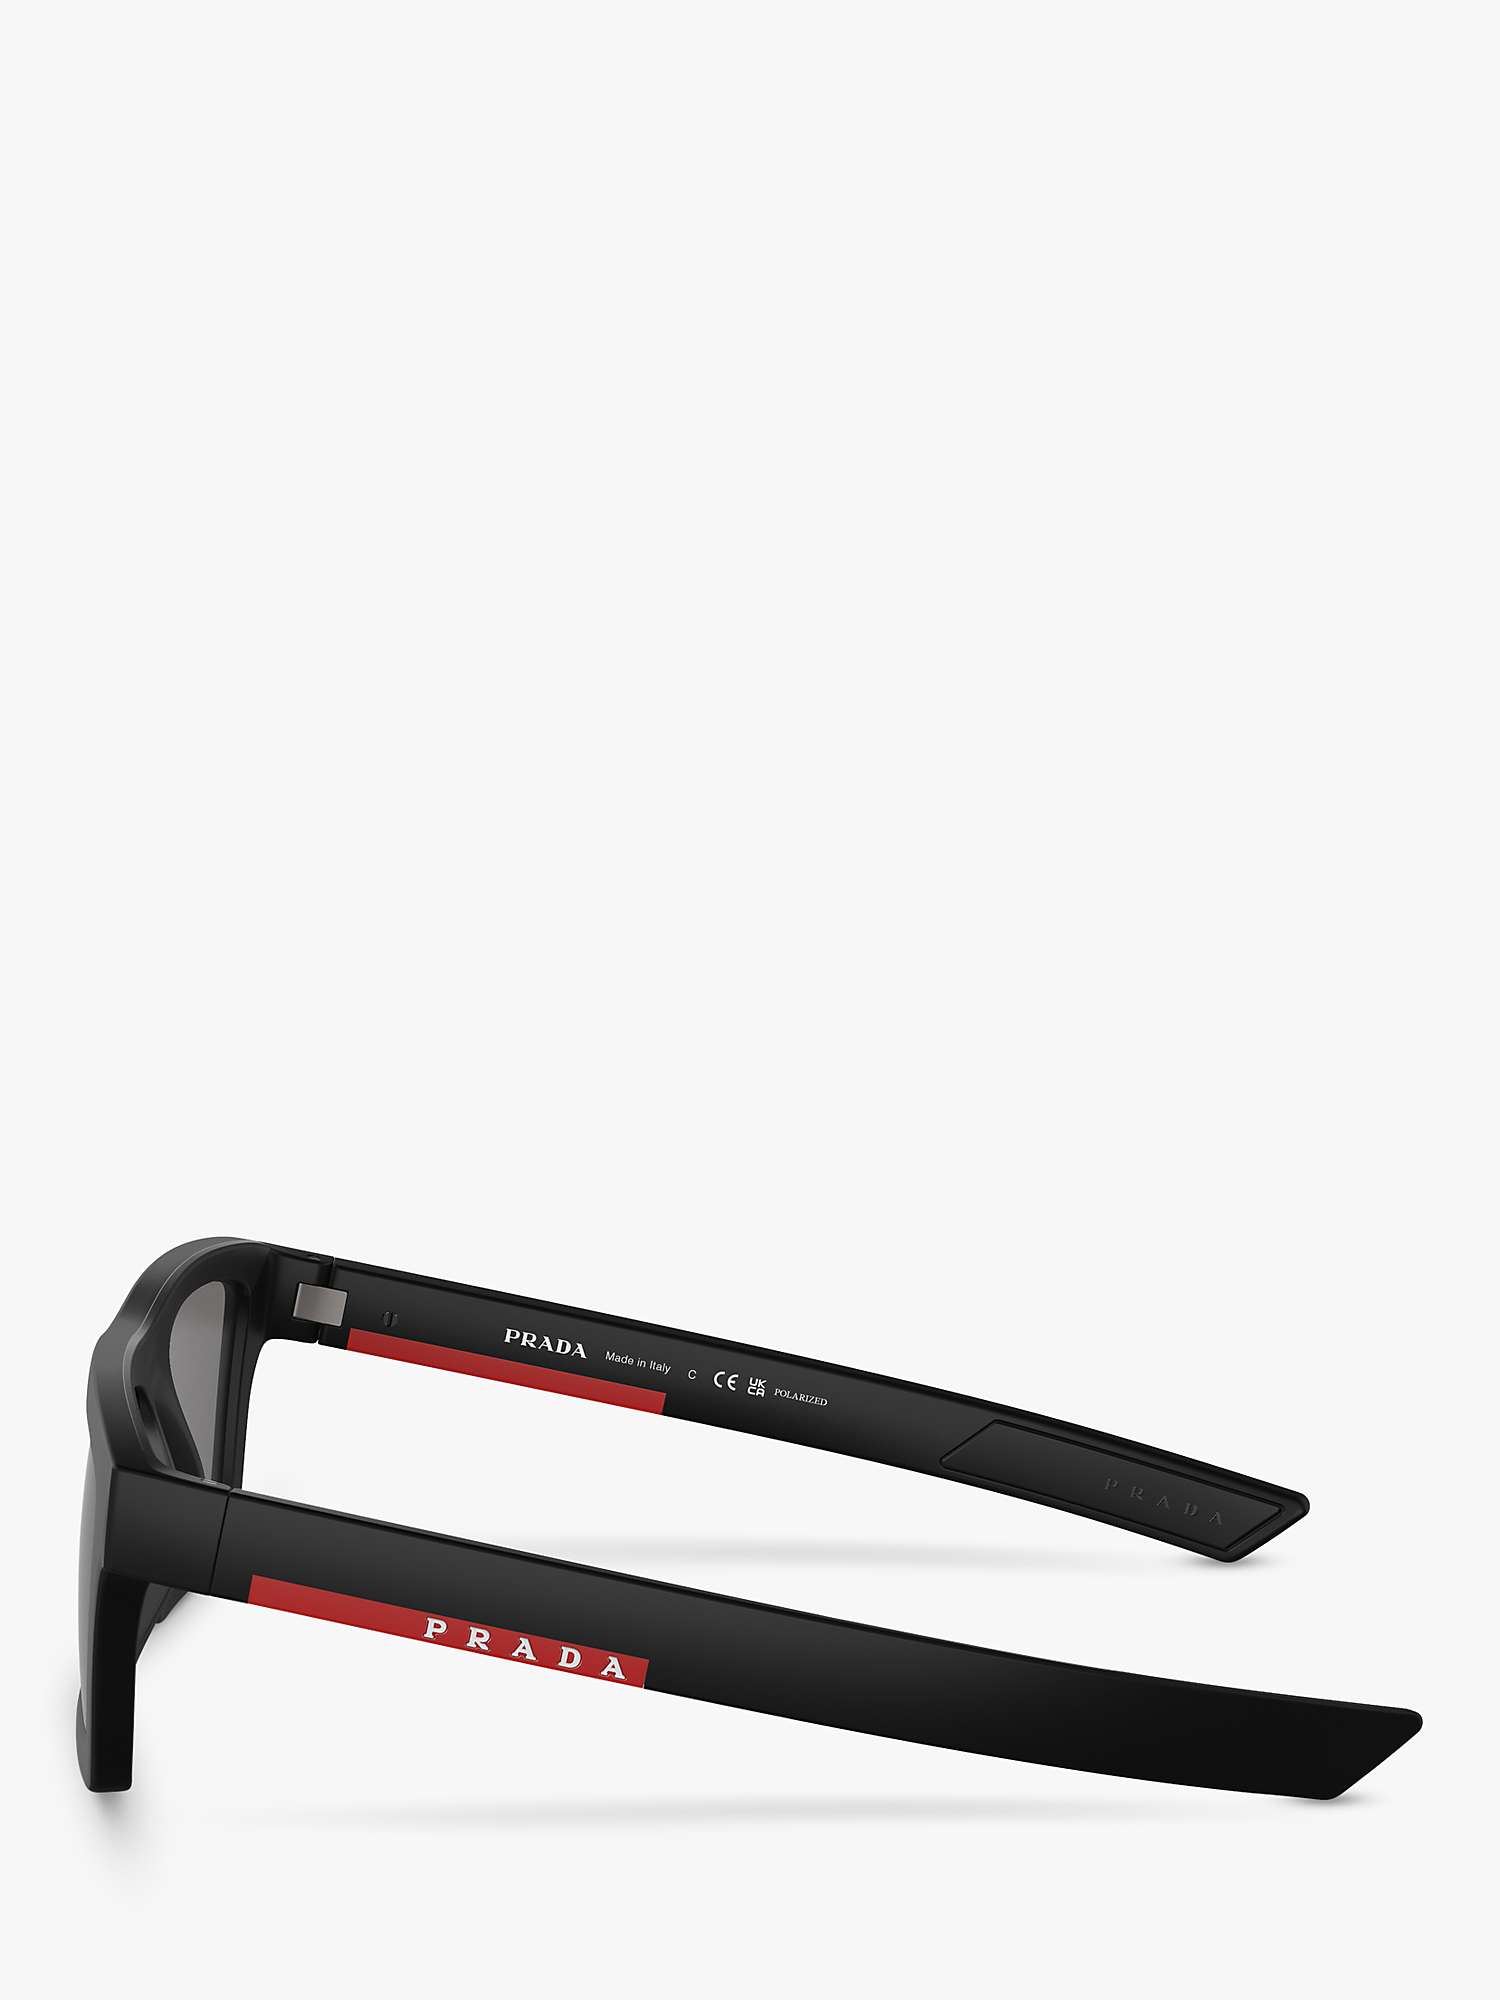 Buy Prada PS 02ZS Men's Rectangular Polarised Sunglasses, Black/Grey Online at johnlewis.com